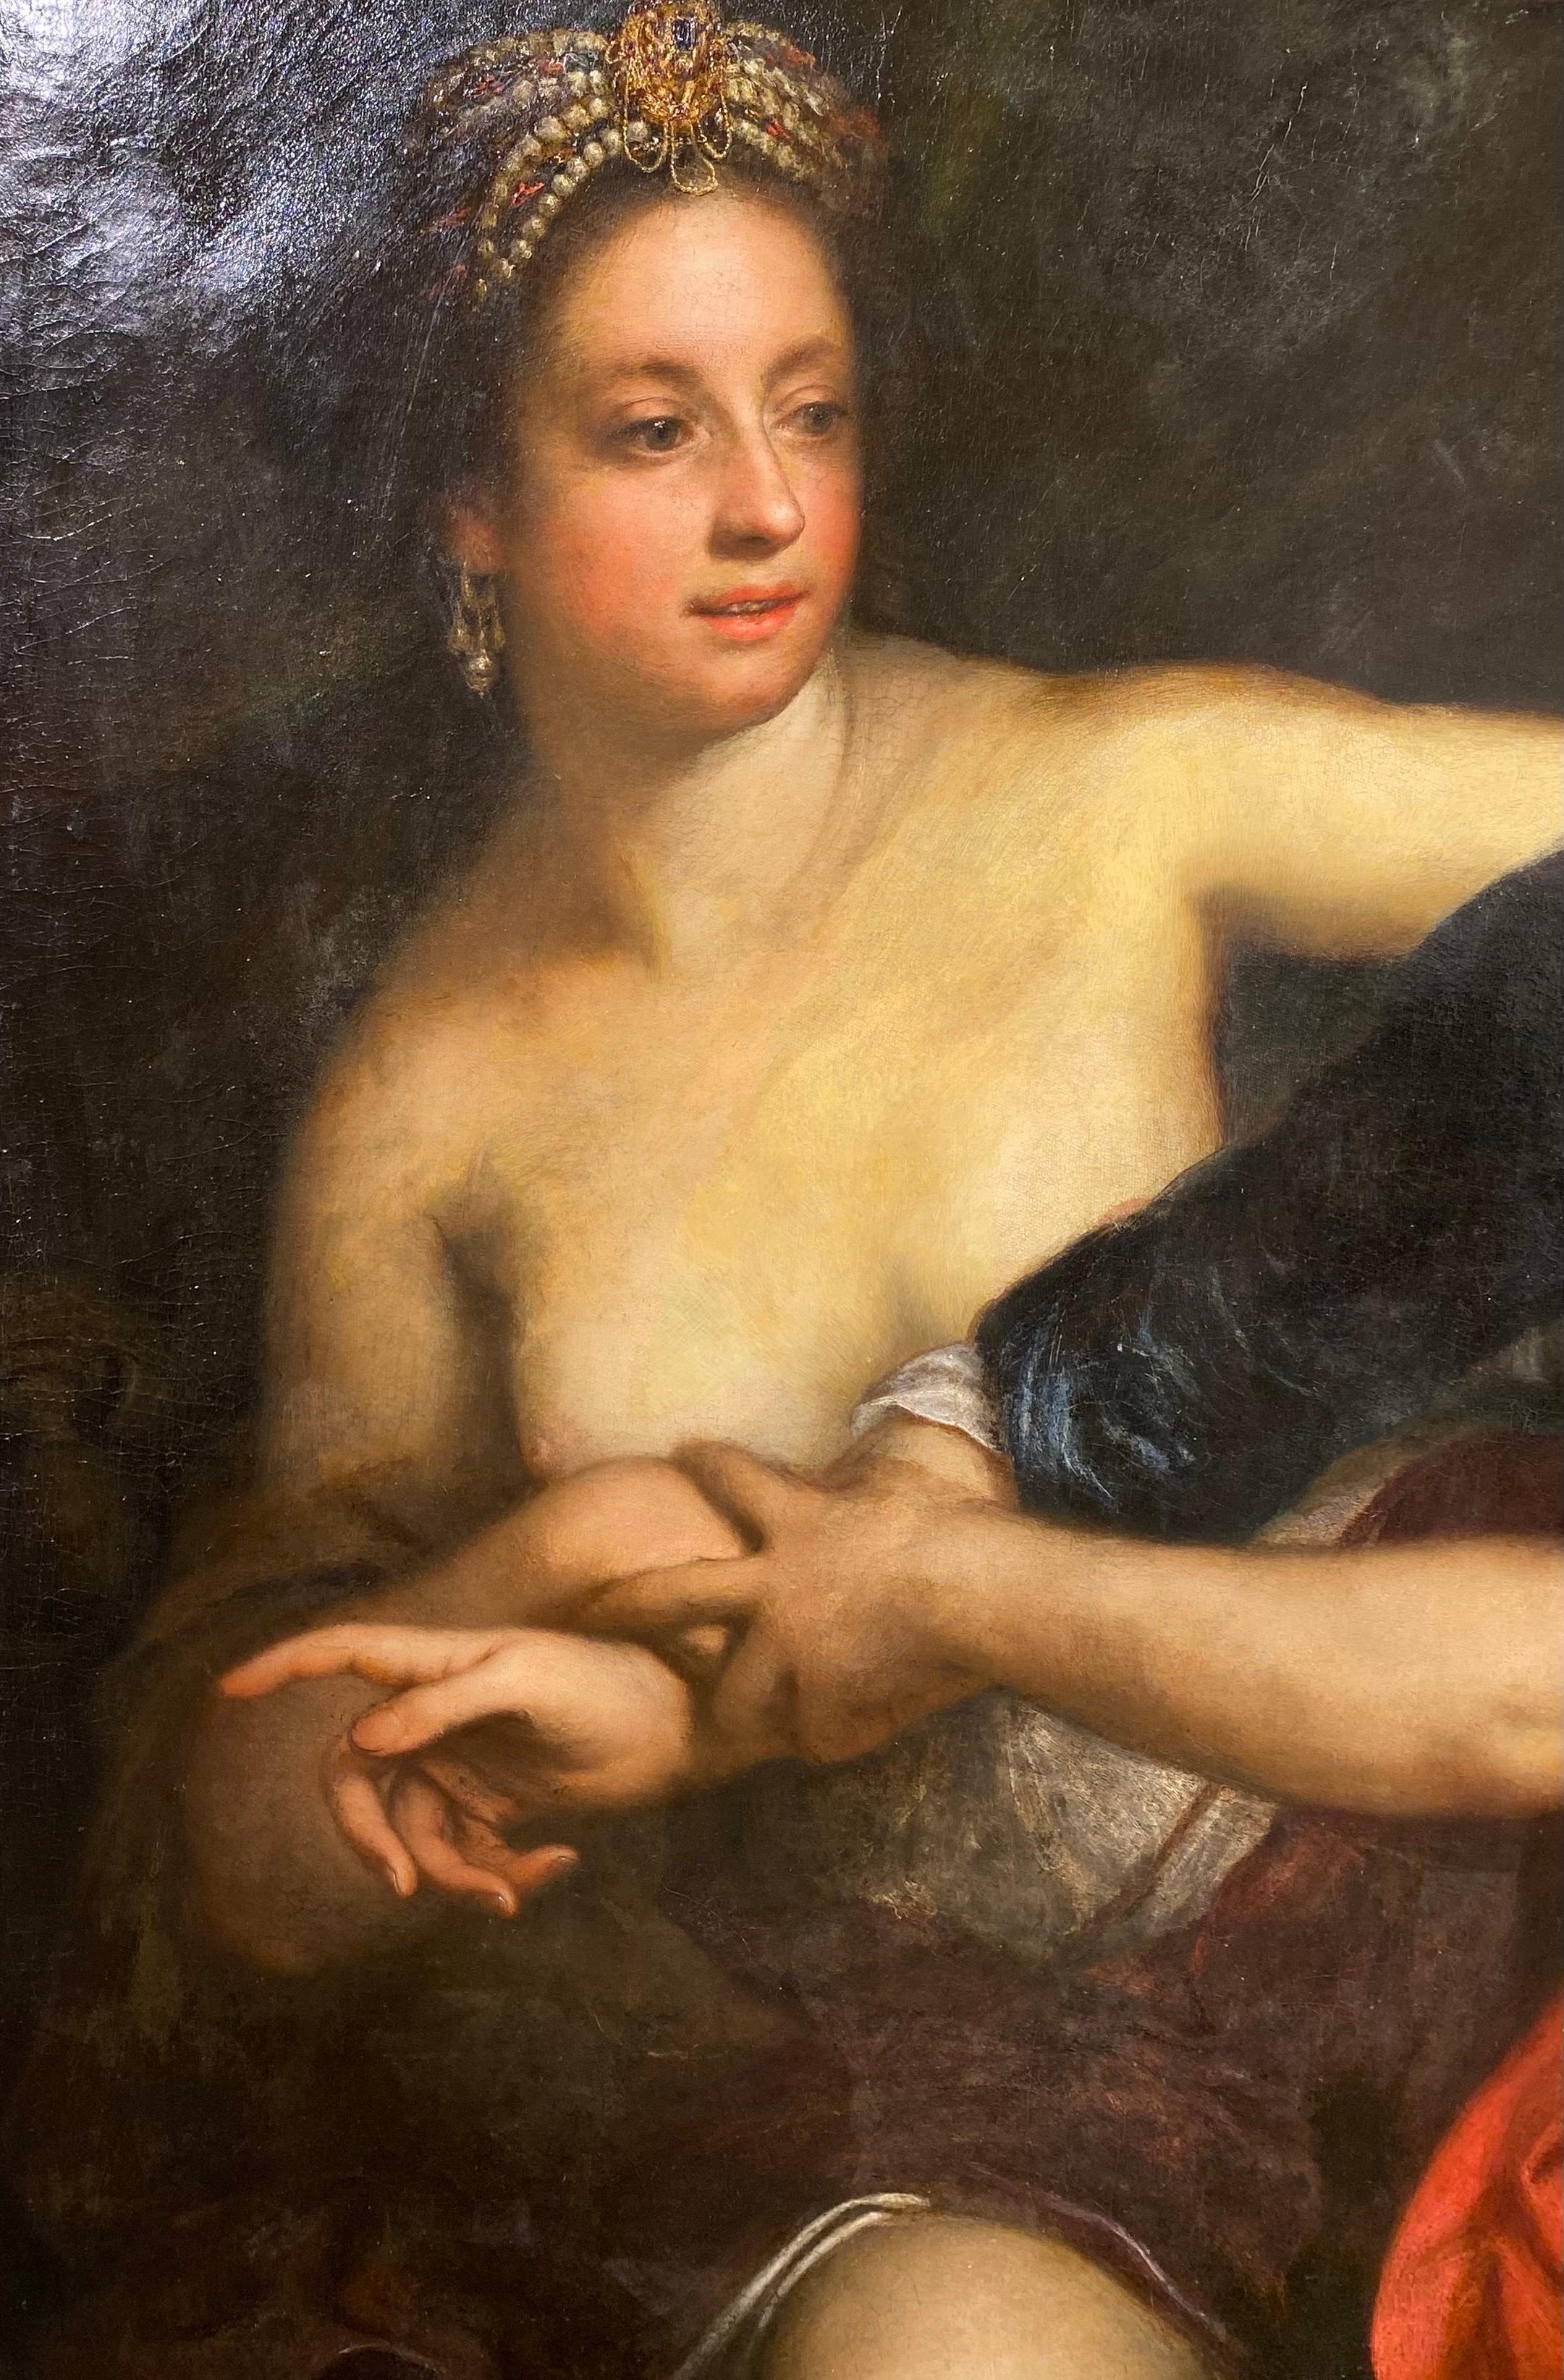 Wife of Putifar - Painting by Girolamo Forabosco